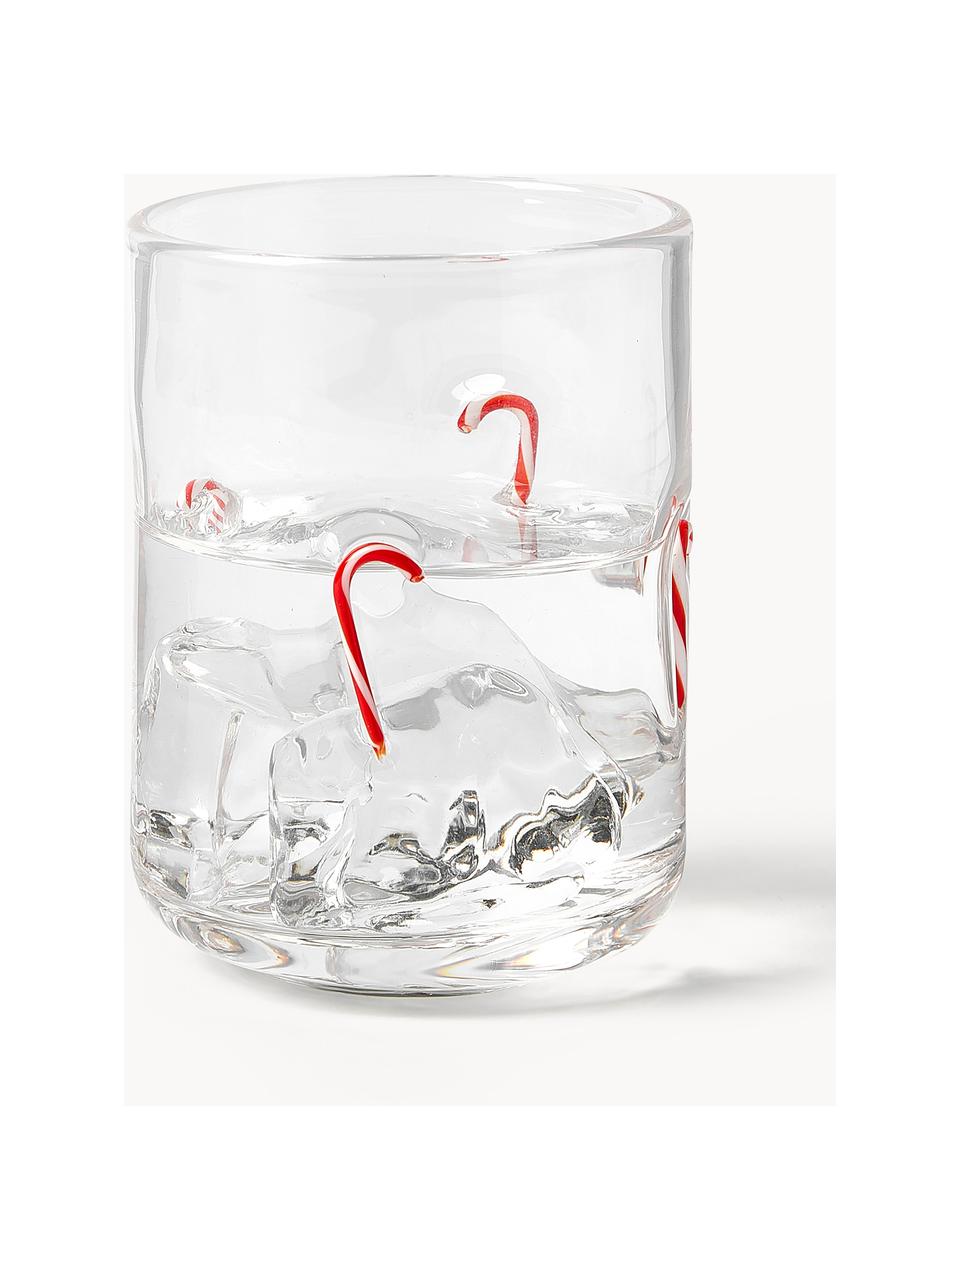 Bicchieri per l'acqua in vetro soffiato Candy, 4 pz., Vetro, Trasparente, Larg. 8 x Alt. 11 cm, 370 ml